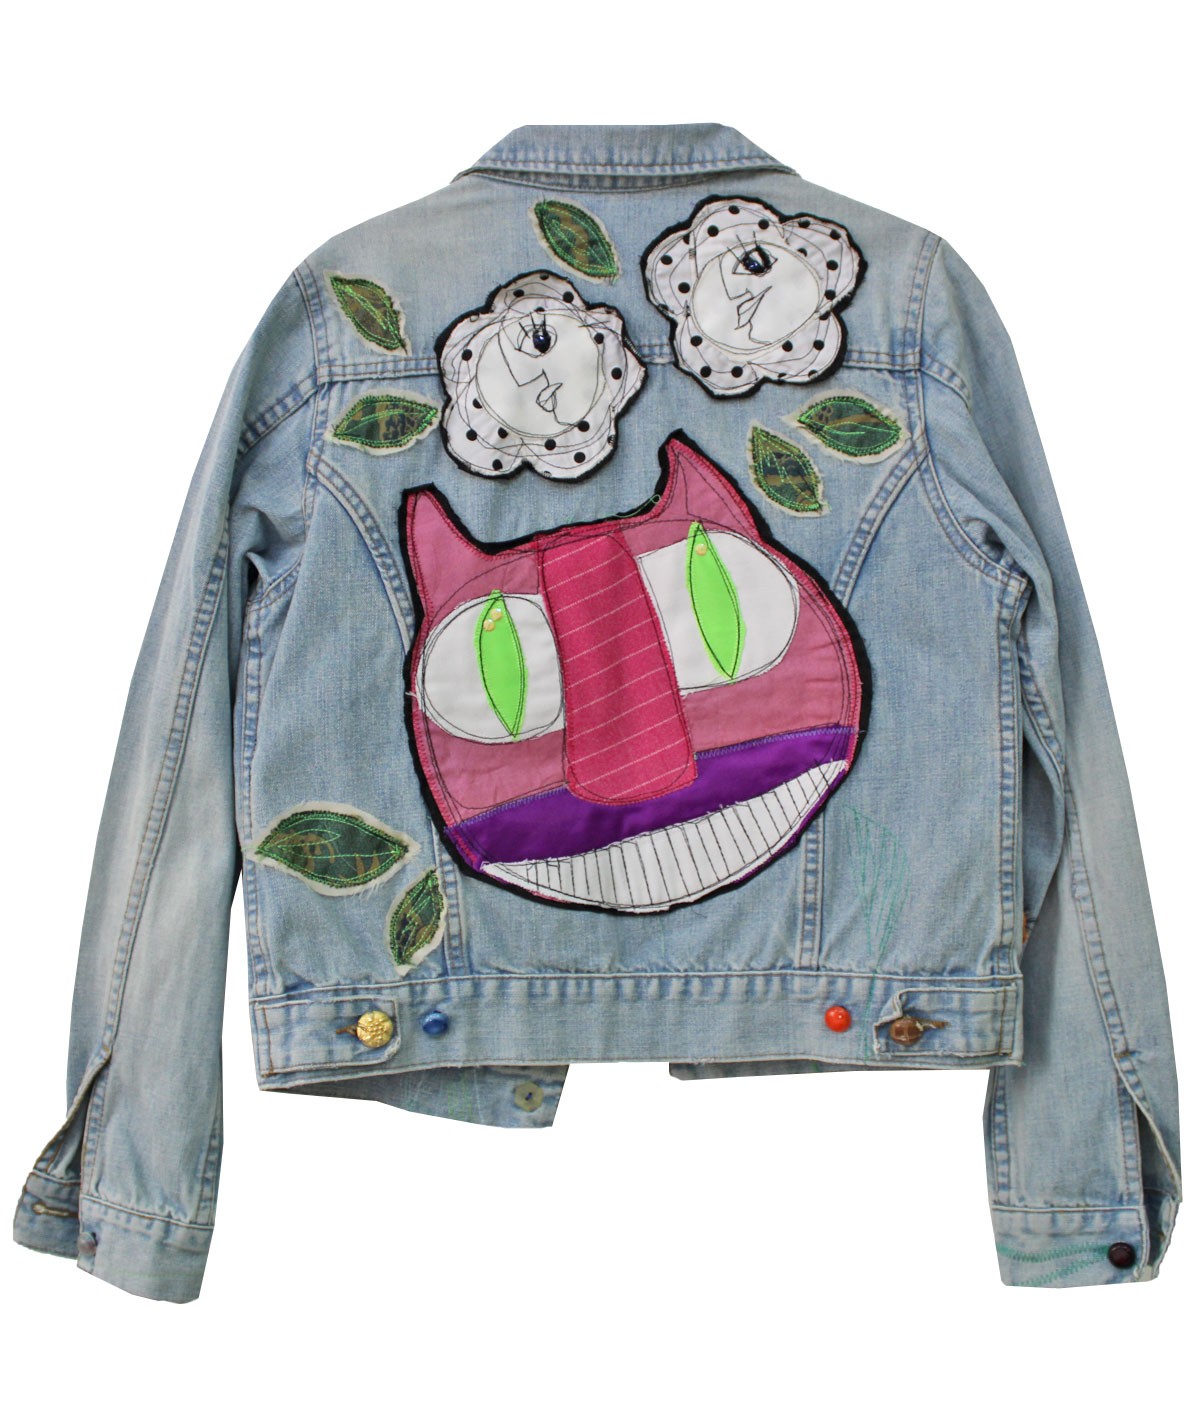 Cheshire cat jacket -...